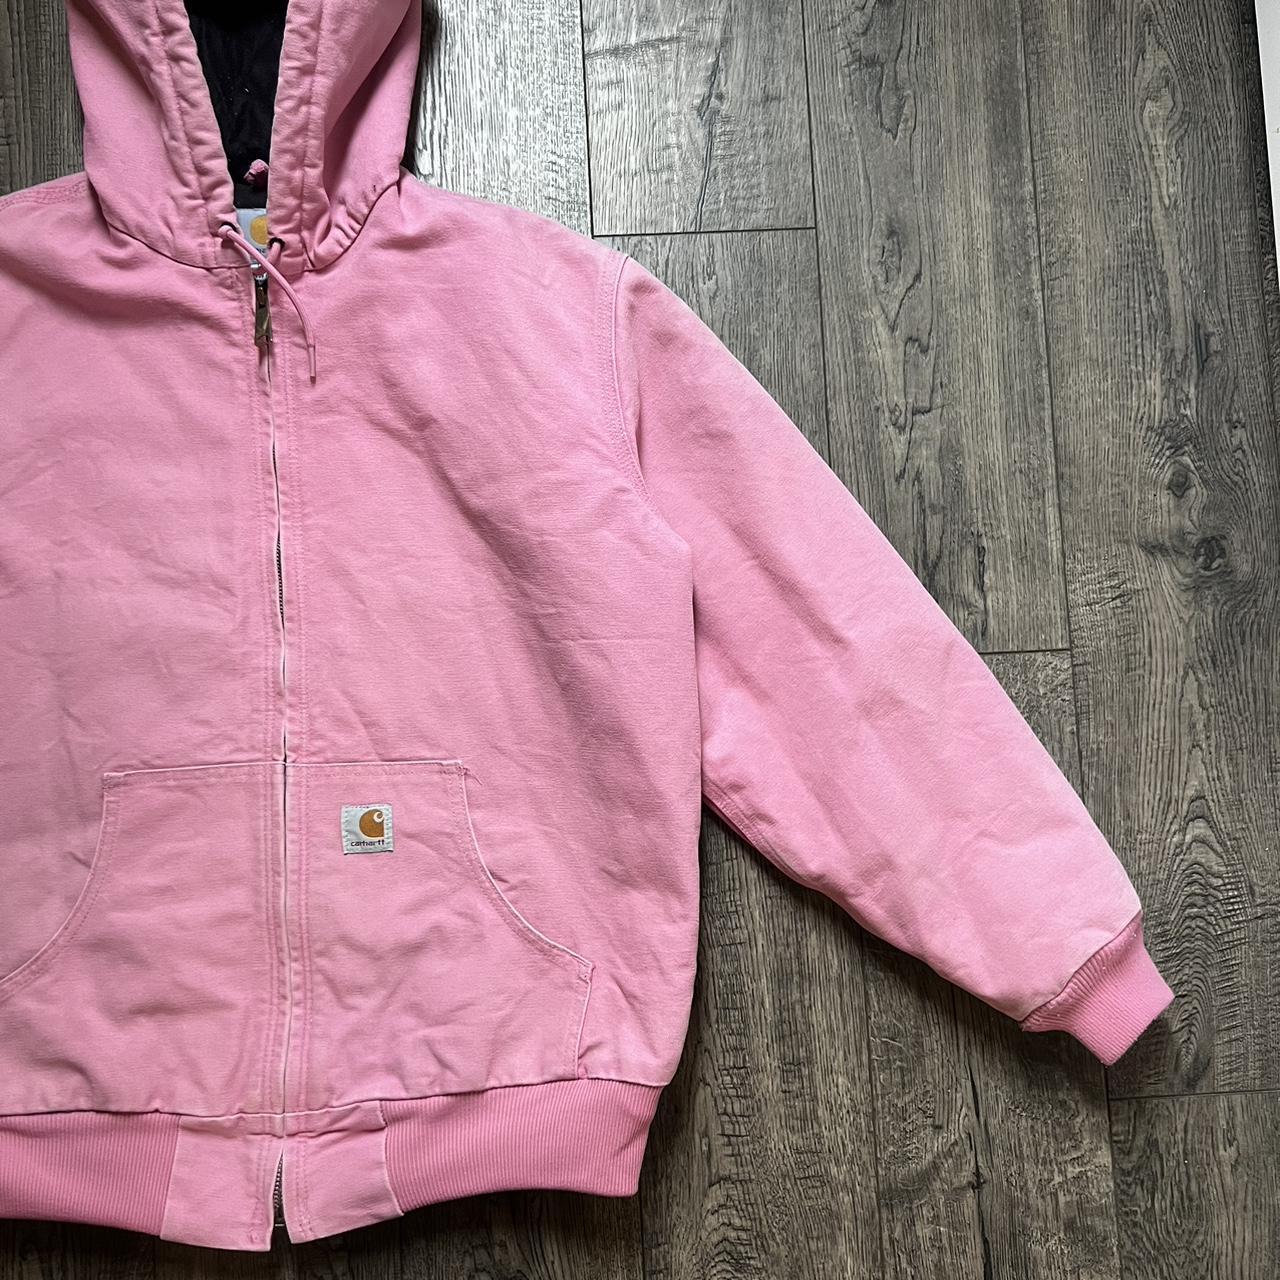 Vintage Pink Carhartt Jacket! This style is... - Depop